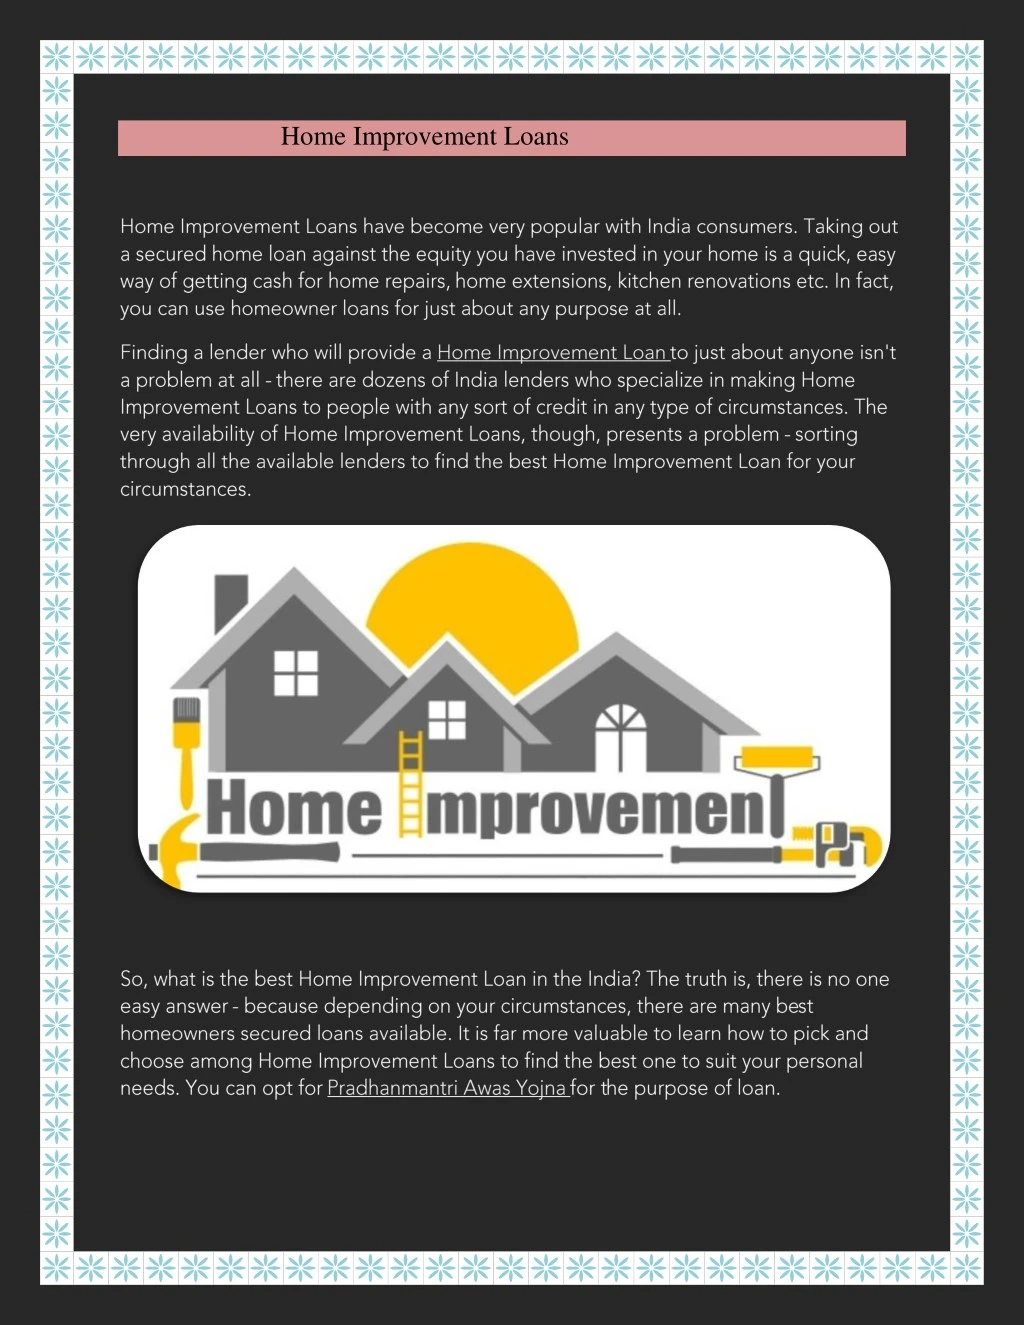 home improvement loans